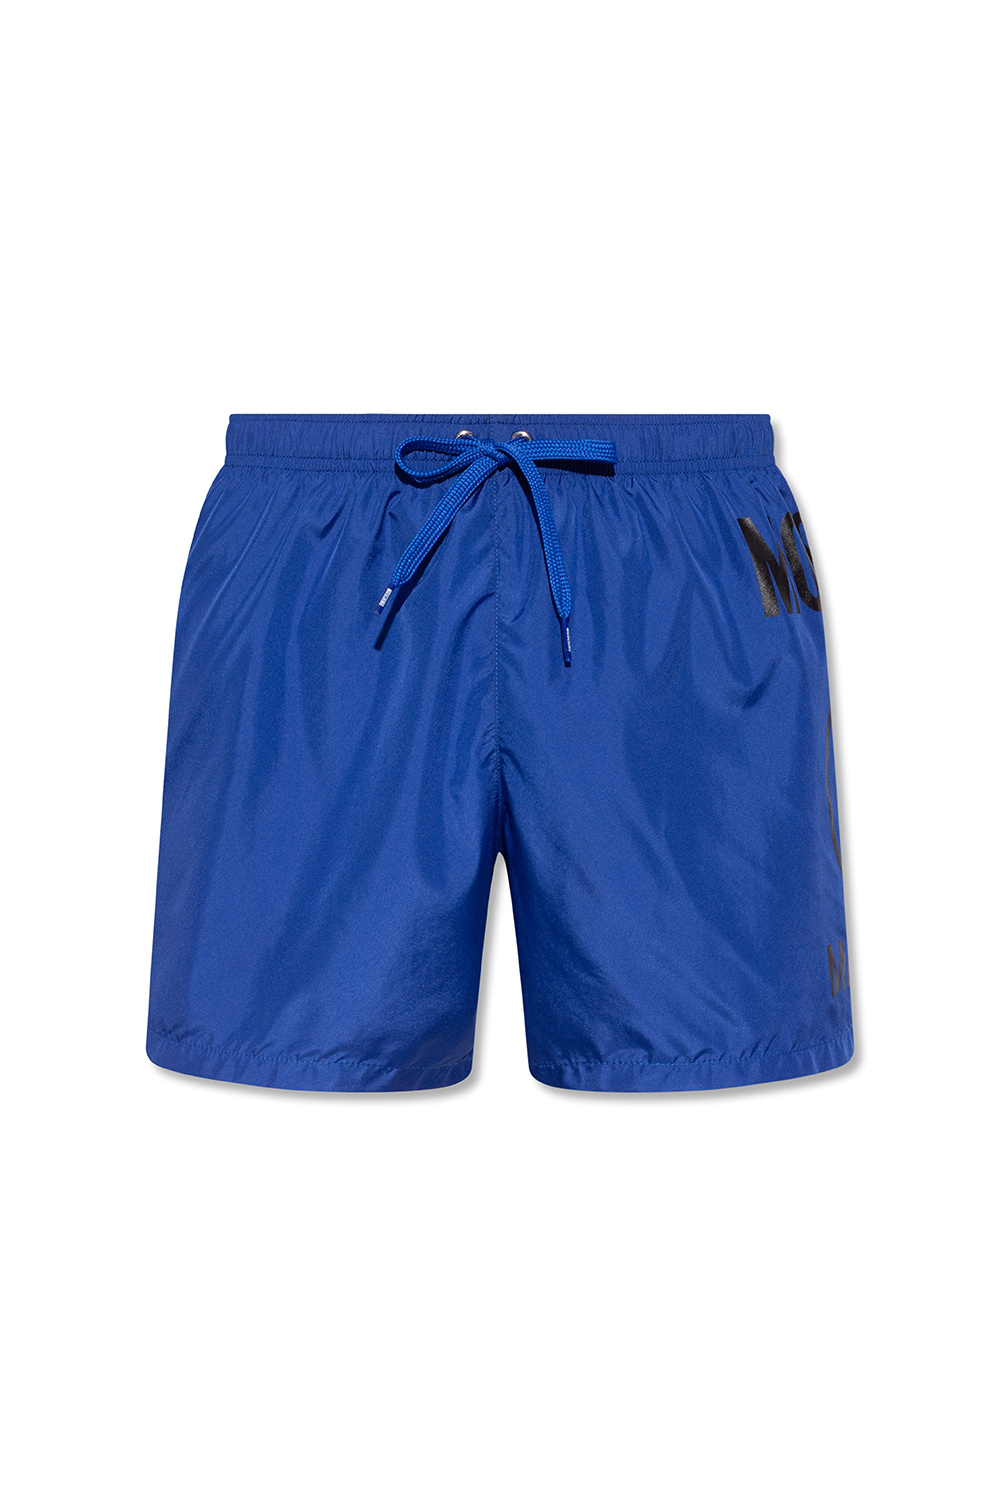 Moschino Swim PLS31260 shorts